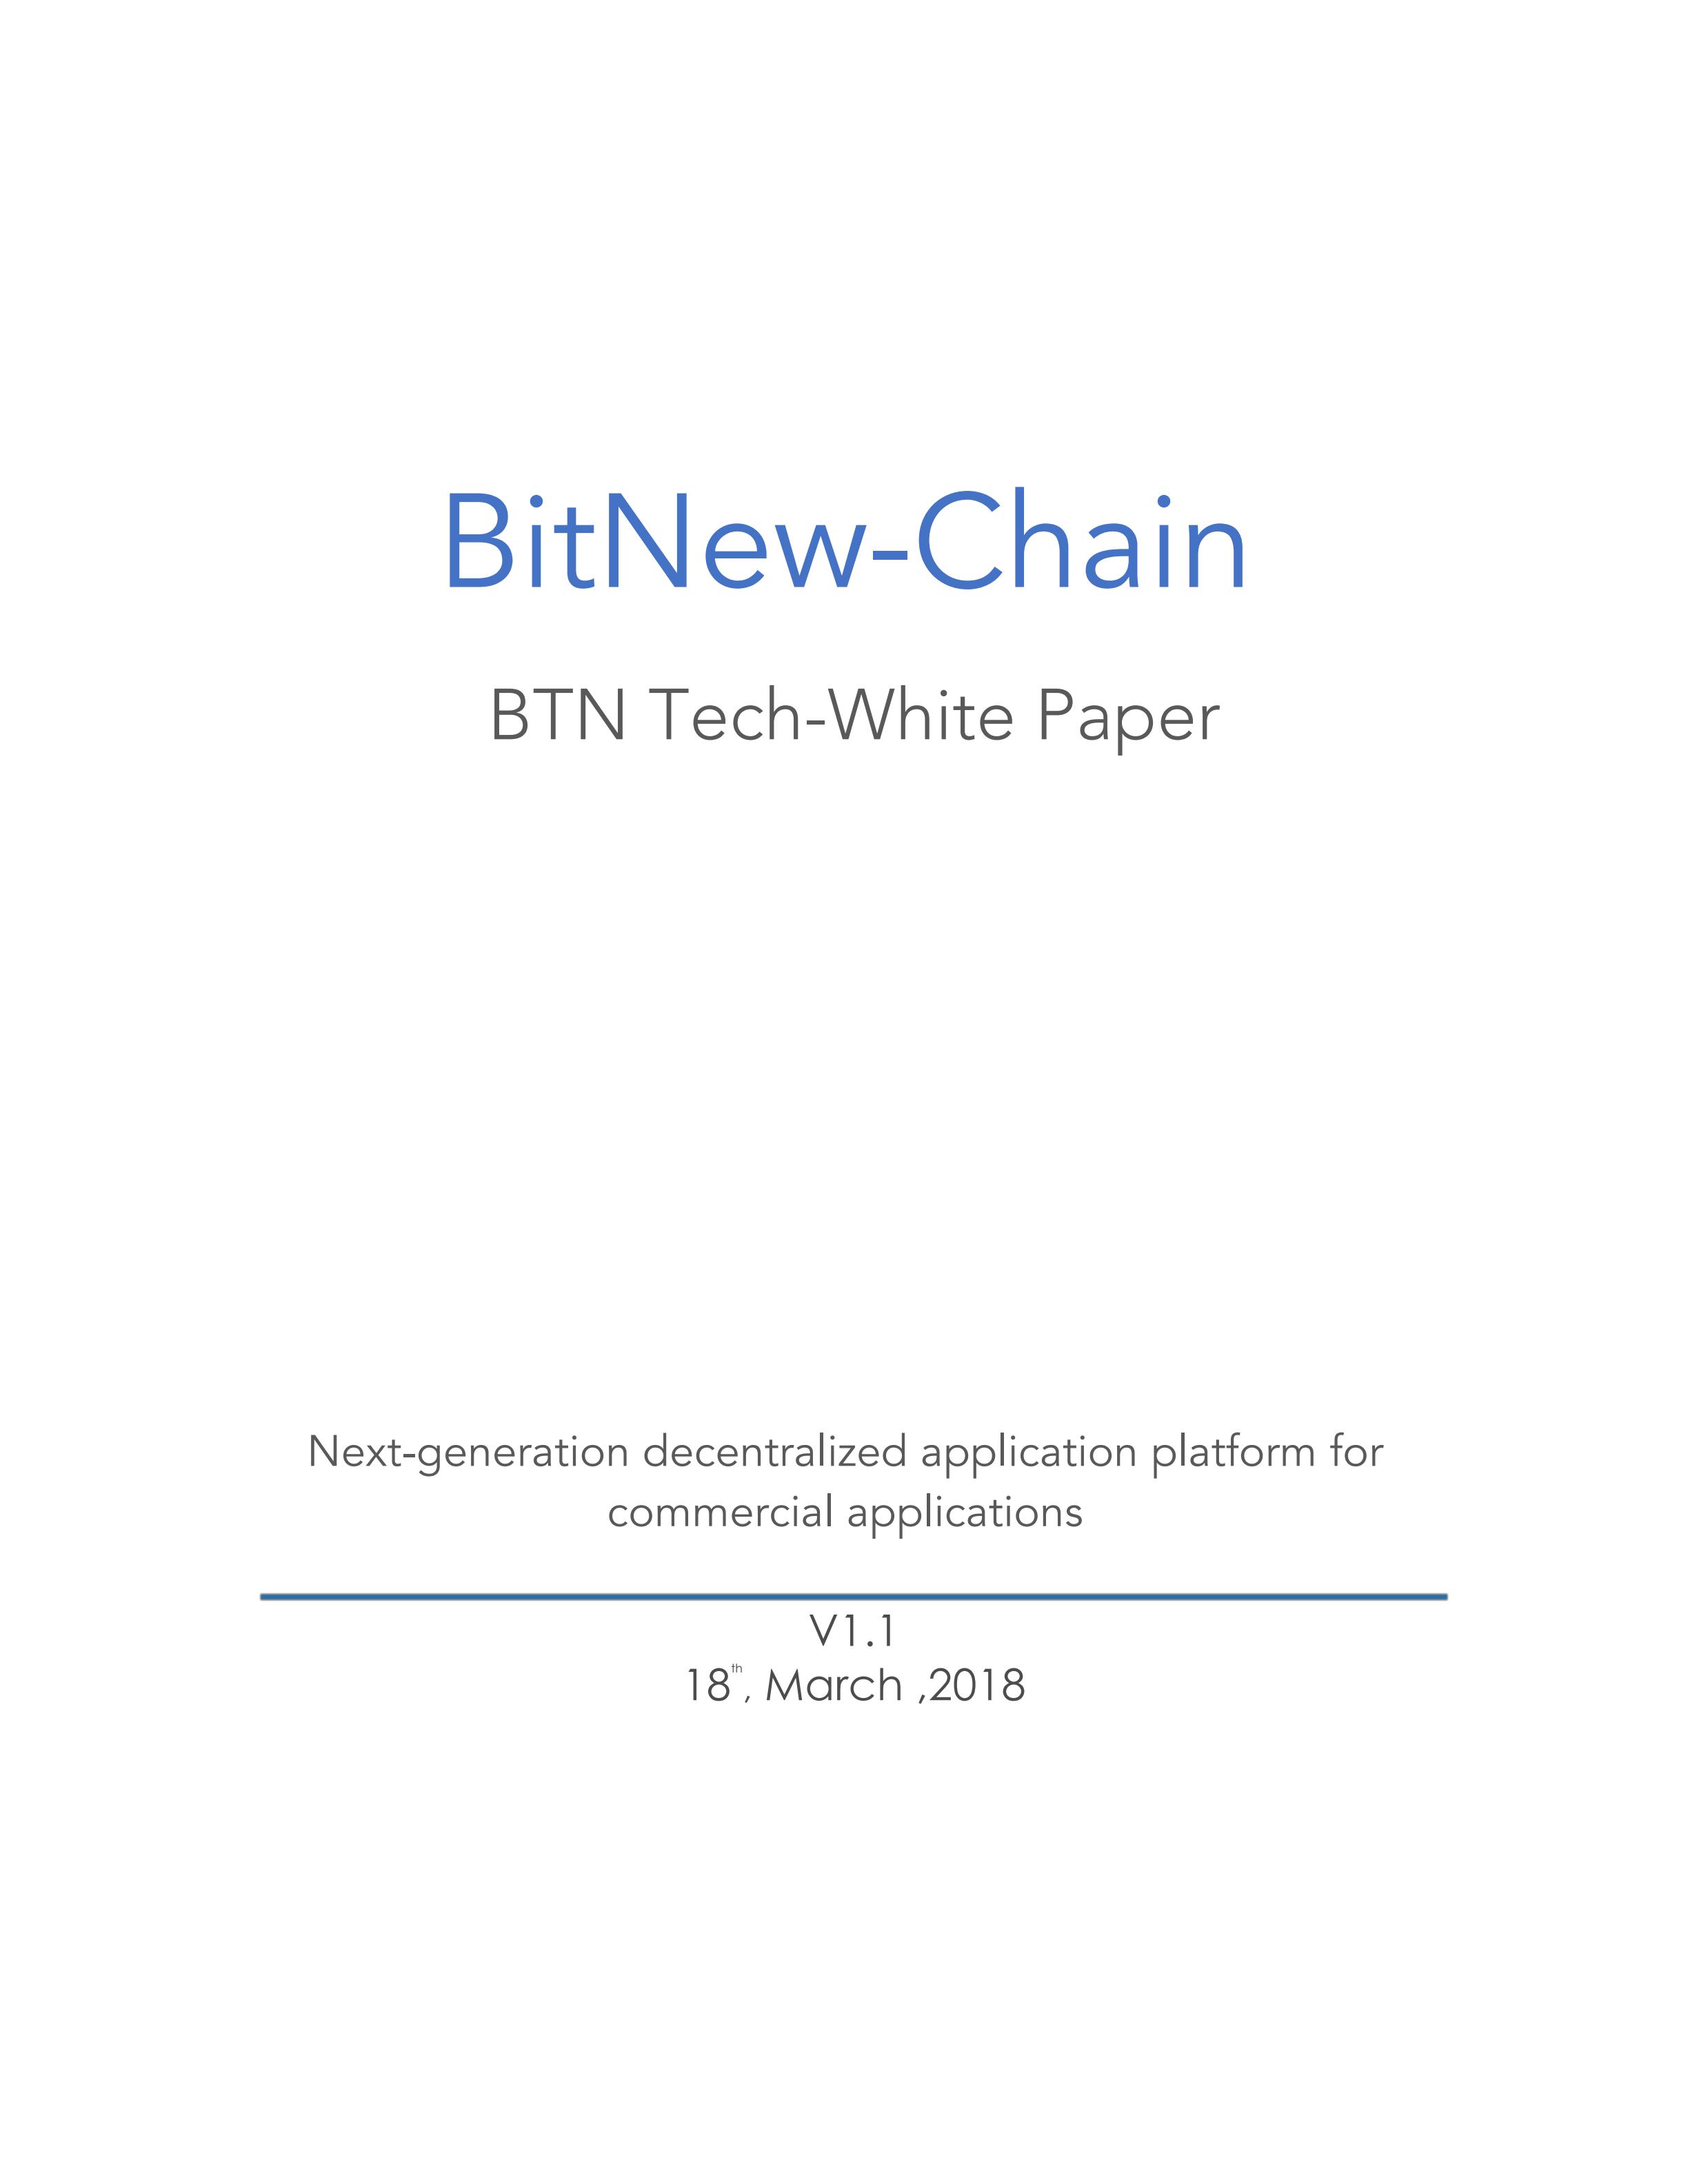 BTN-Tec-whitepaper_finalV1.1_00.jpg